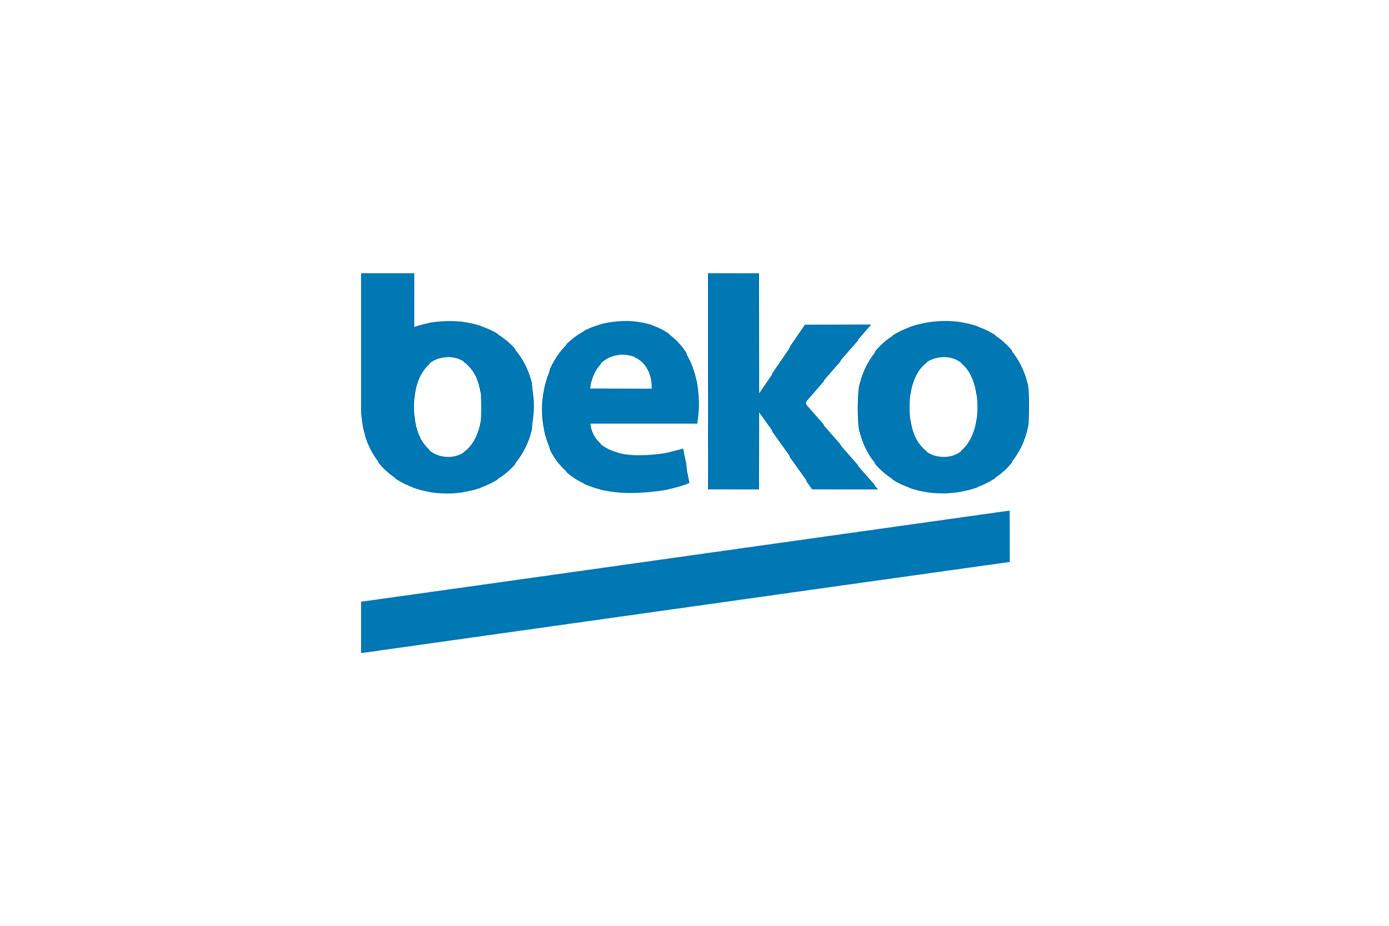 beko-logo.jpg